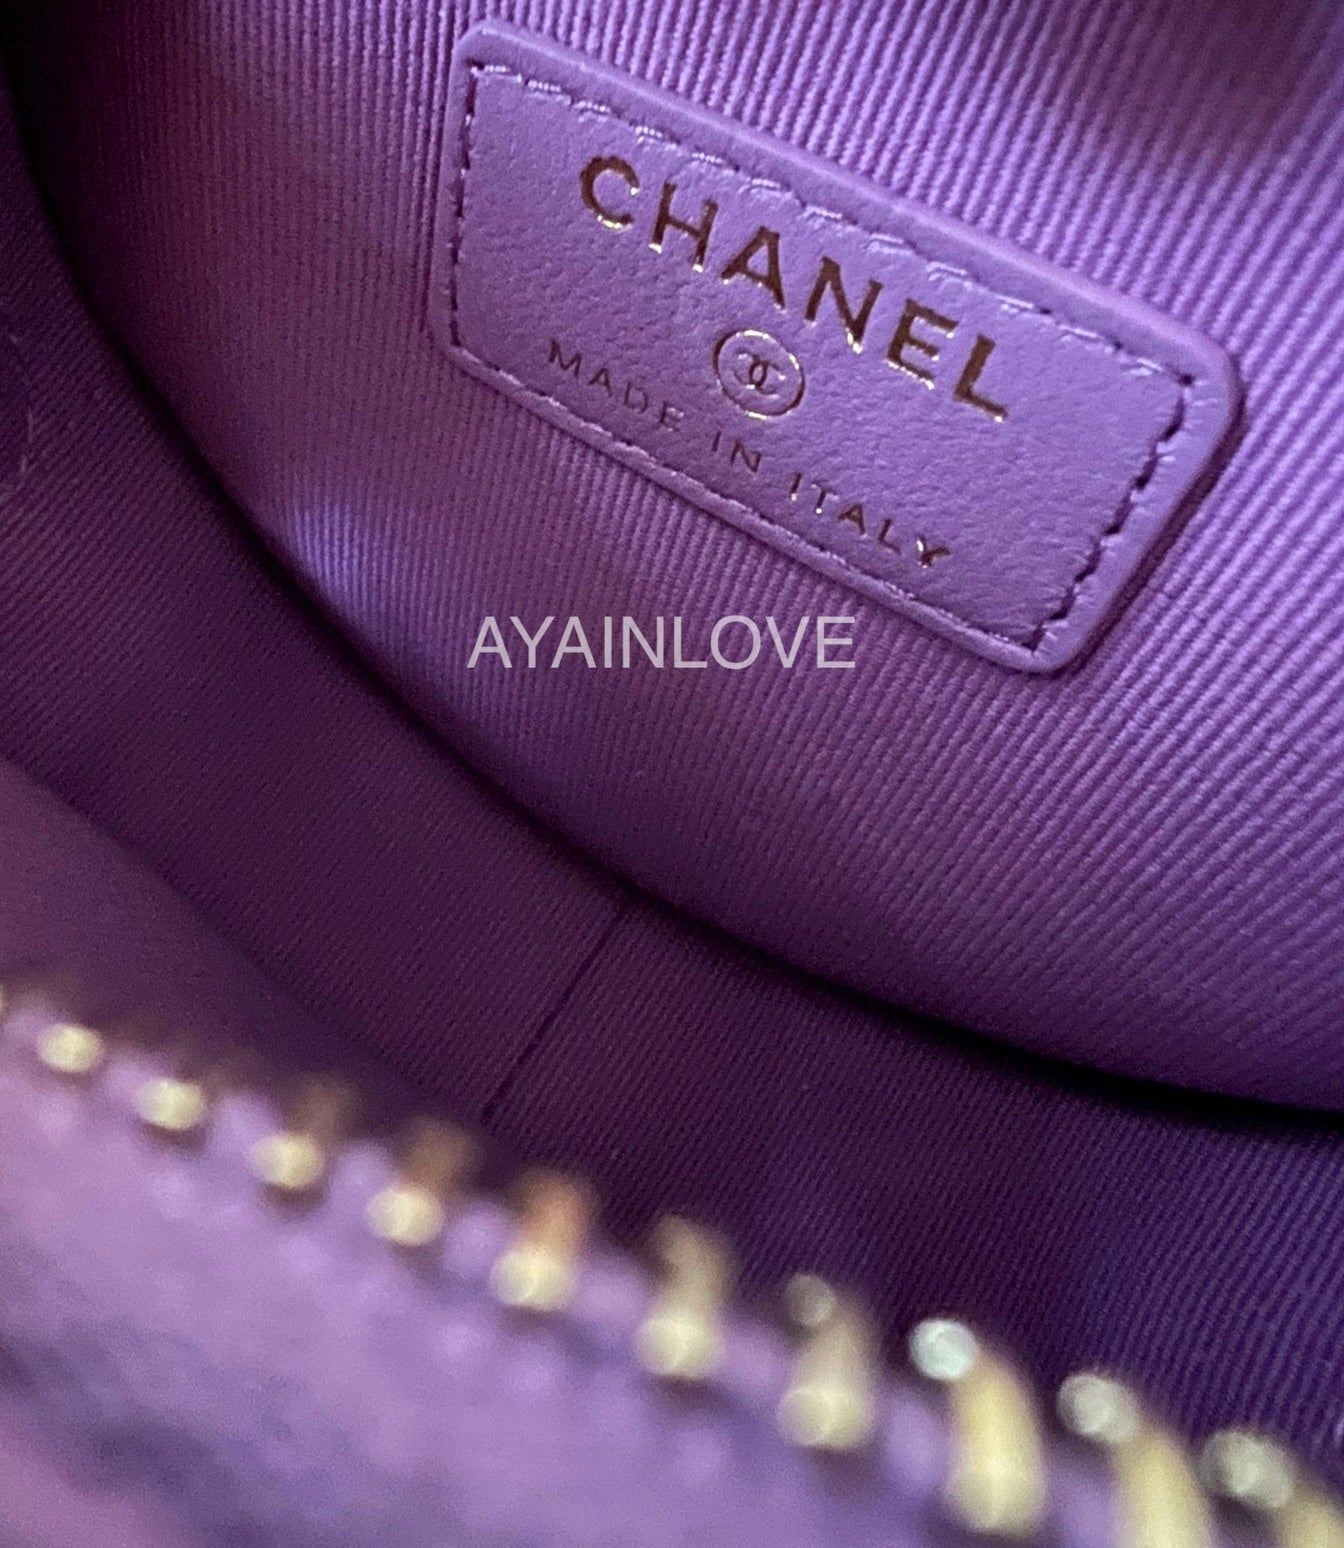 Chanel 22S Heart bag with chain purple lambskin